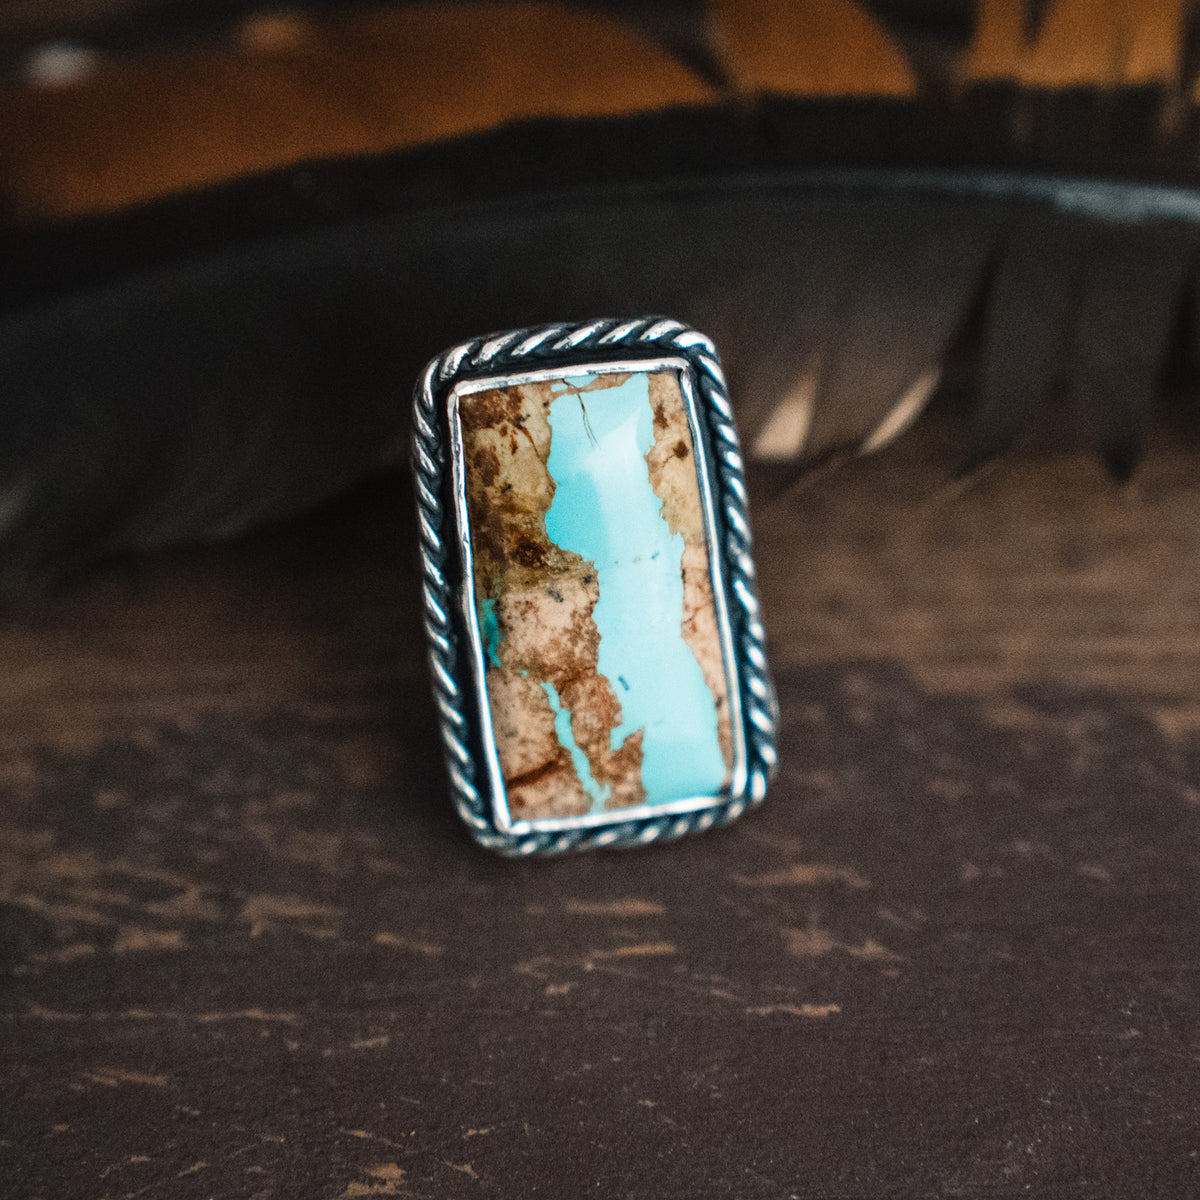 Heartland Ribbon Turquoise Ring - Size 7.5